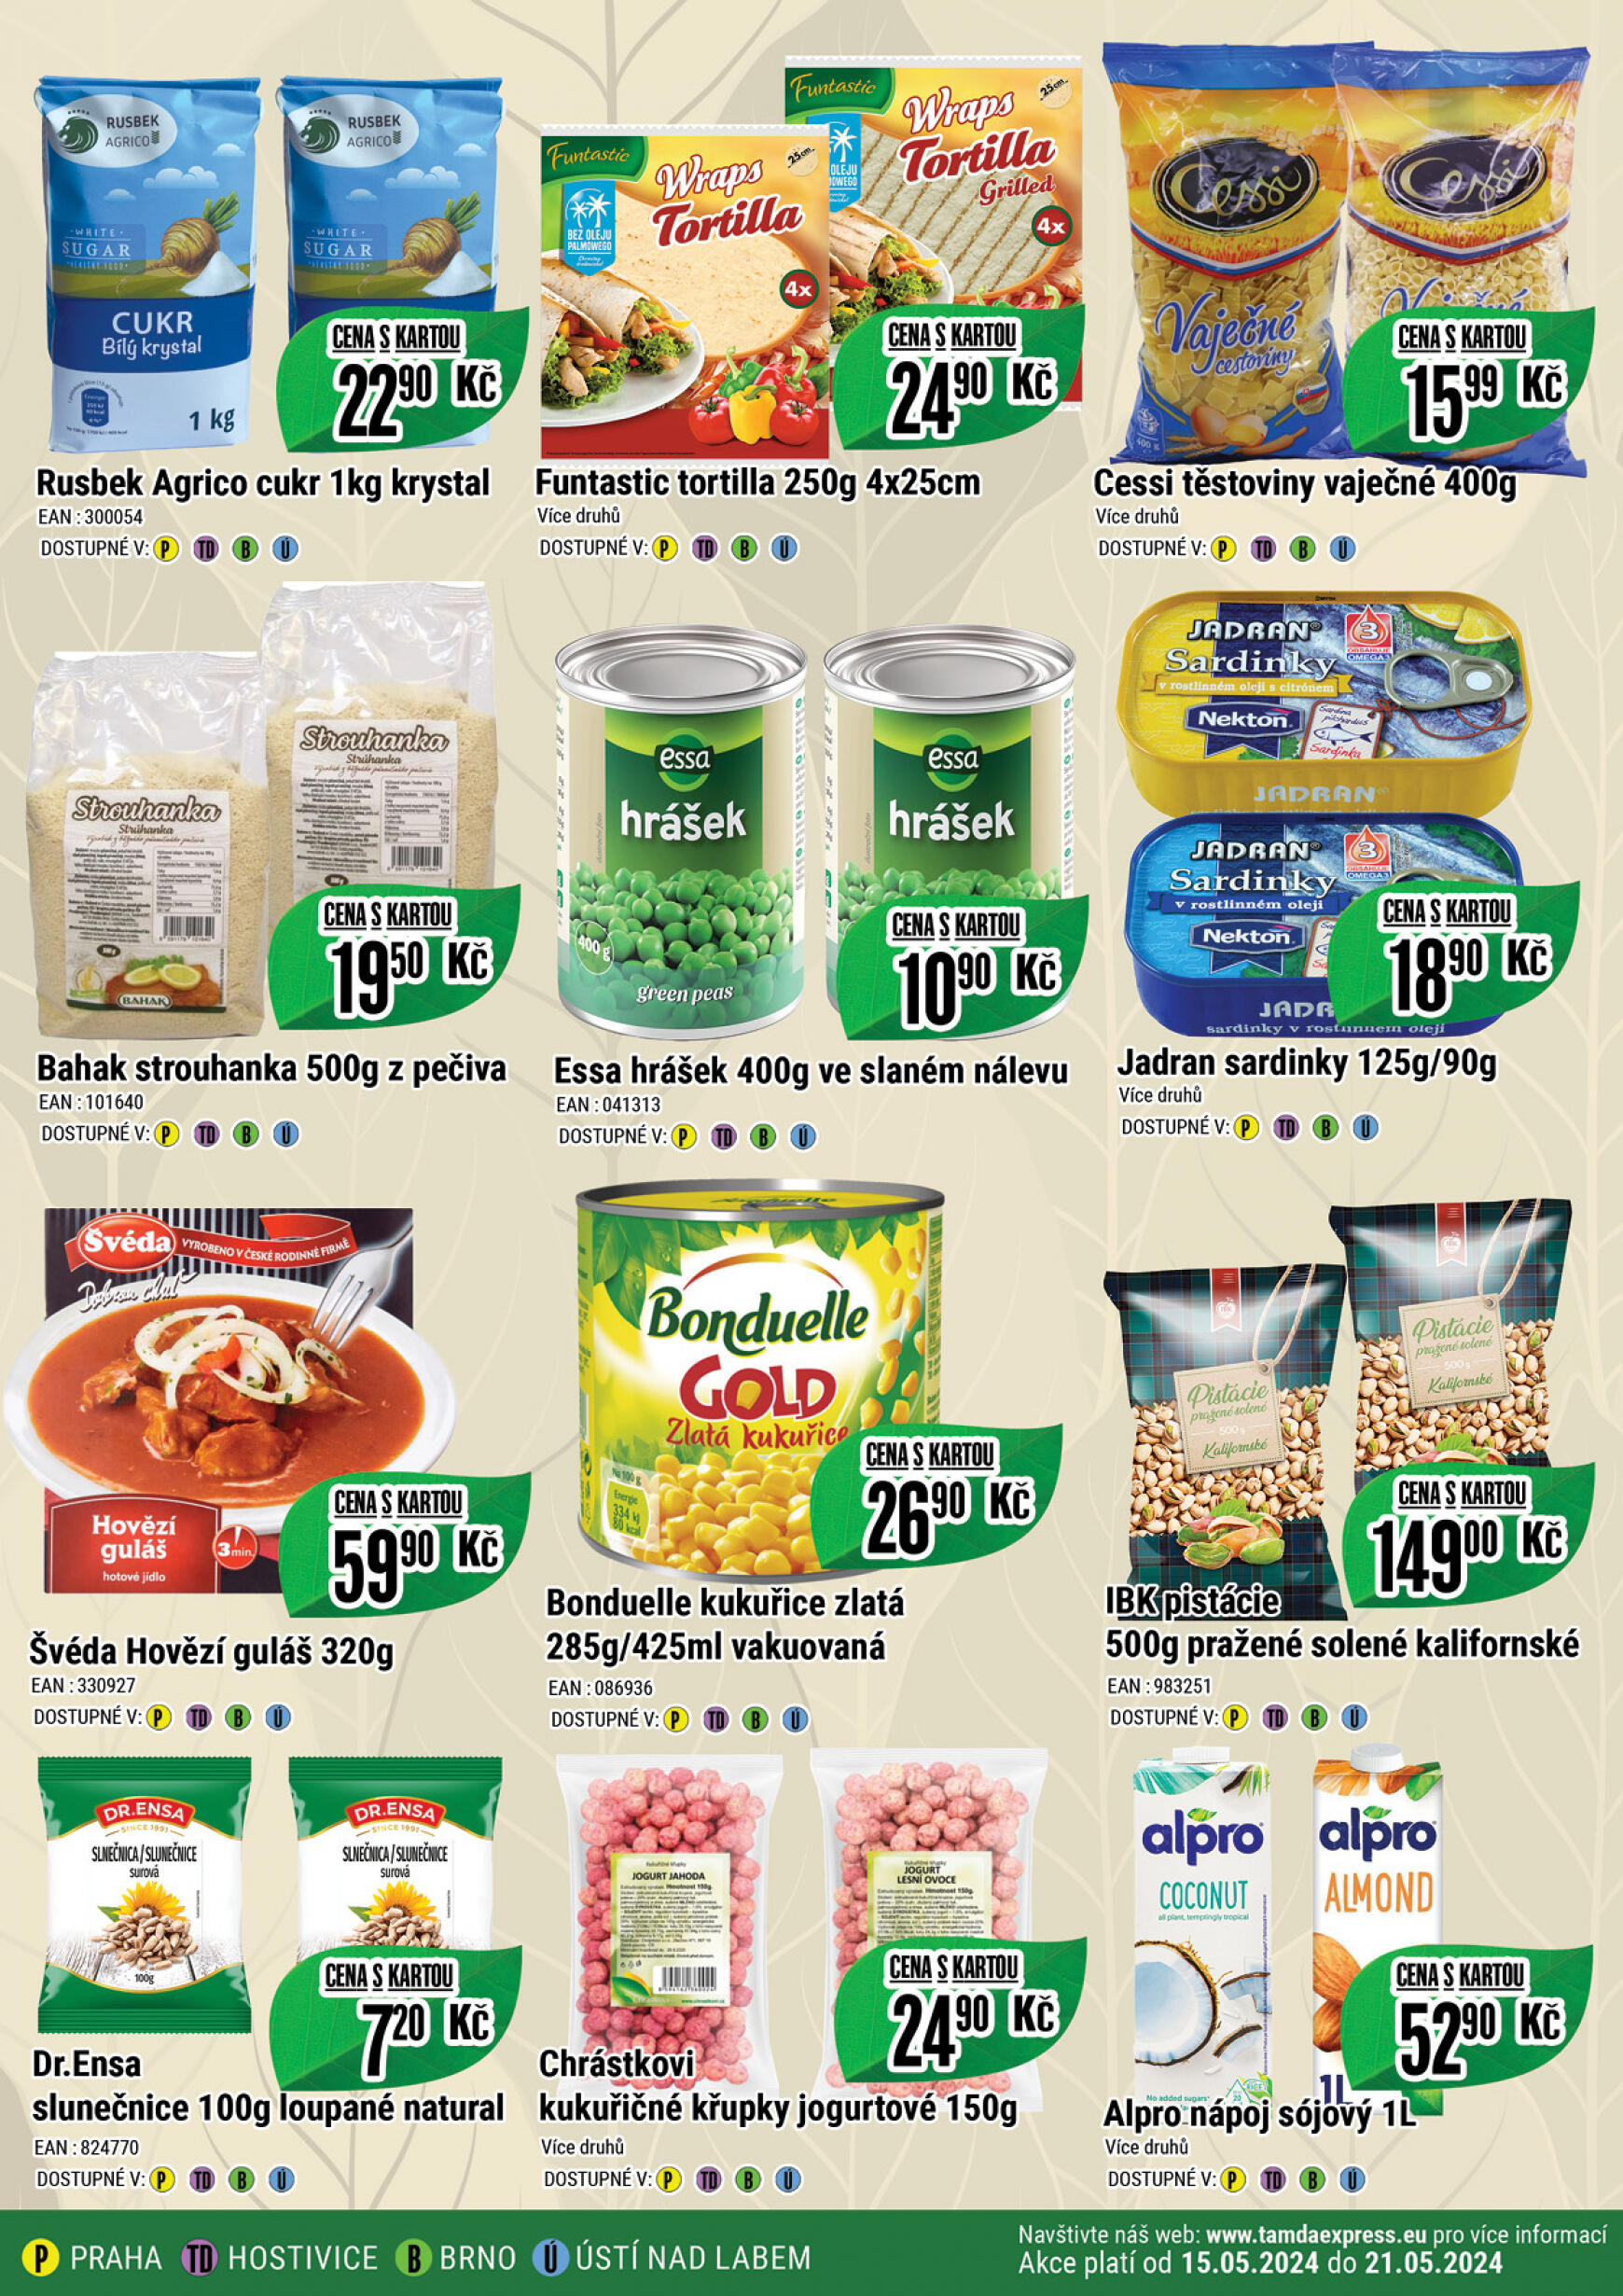 tamda-foods - Leták Tamda Foods aktuální 15.05. - 21.05. - page: 3